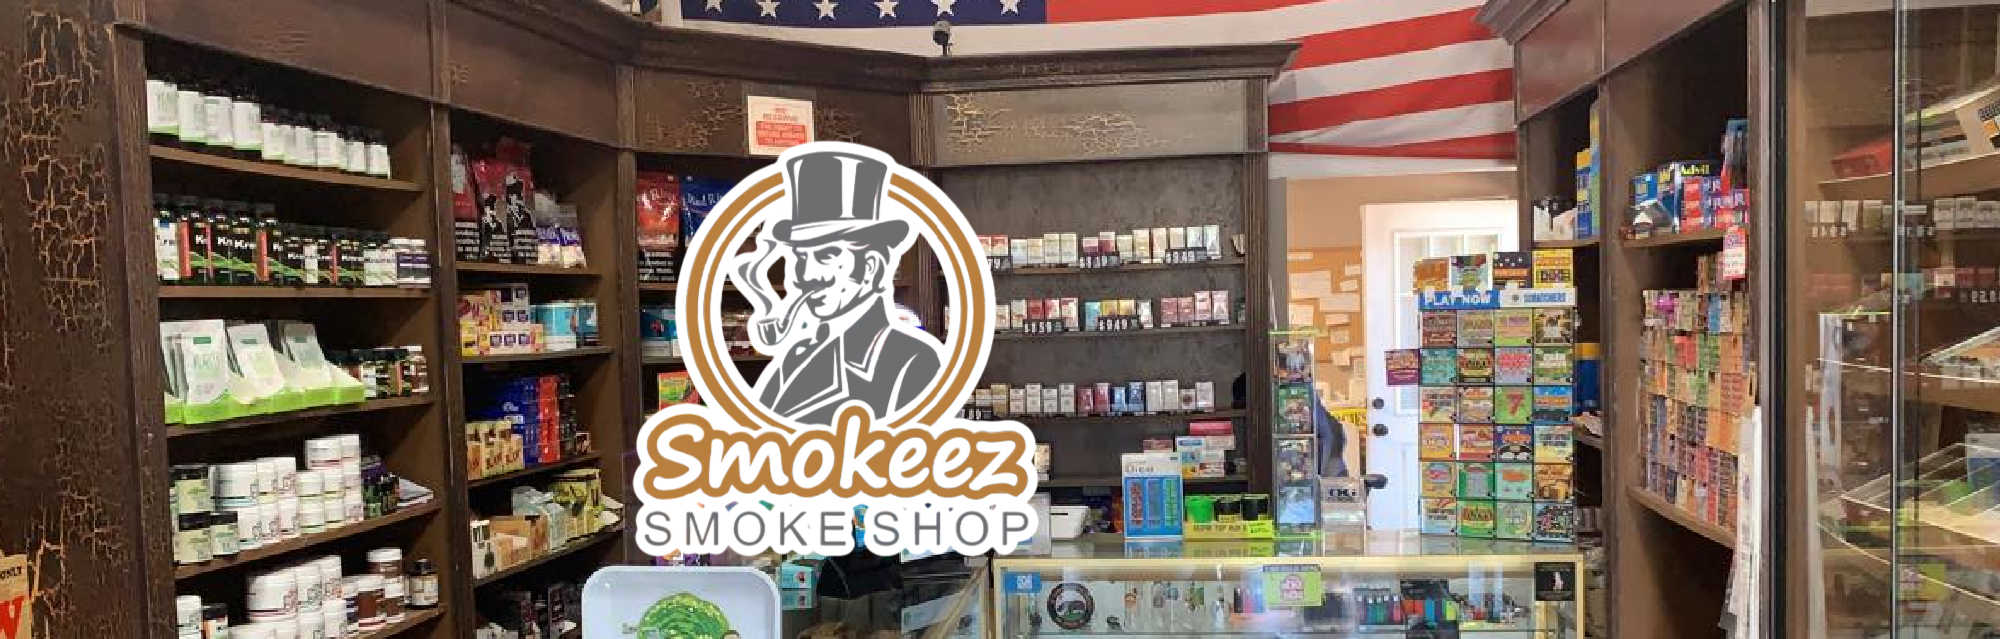 image of smokeez smoke shop in union city